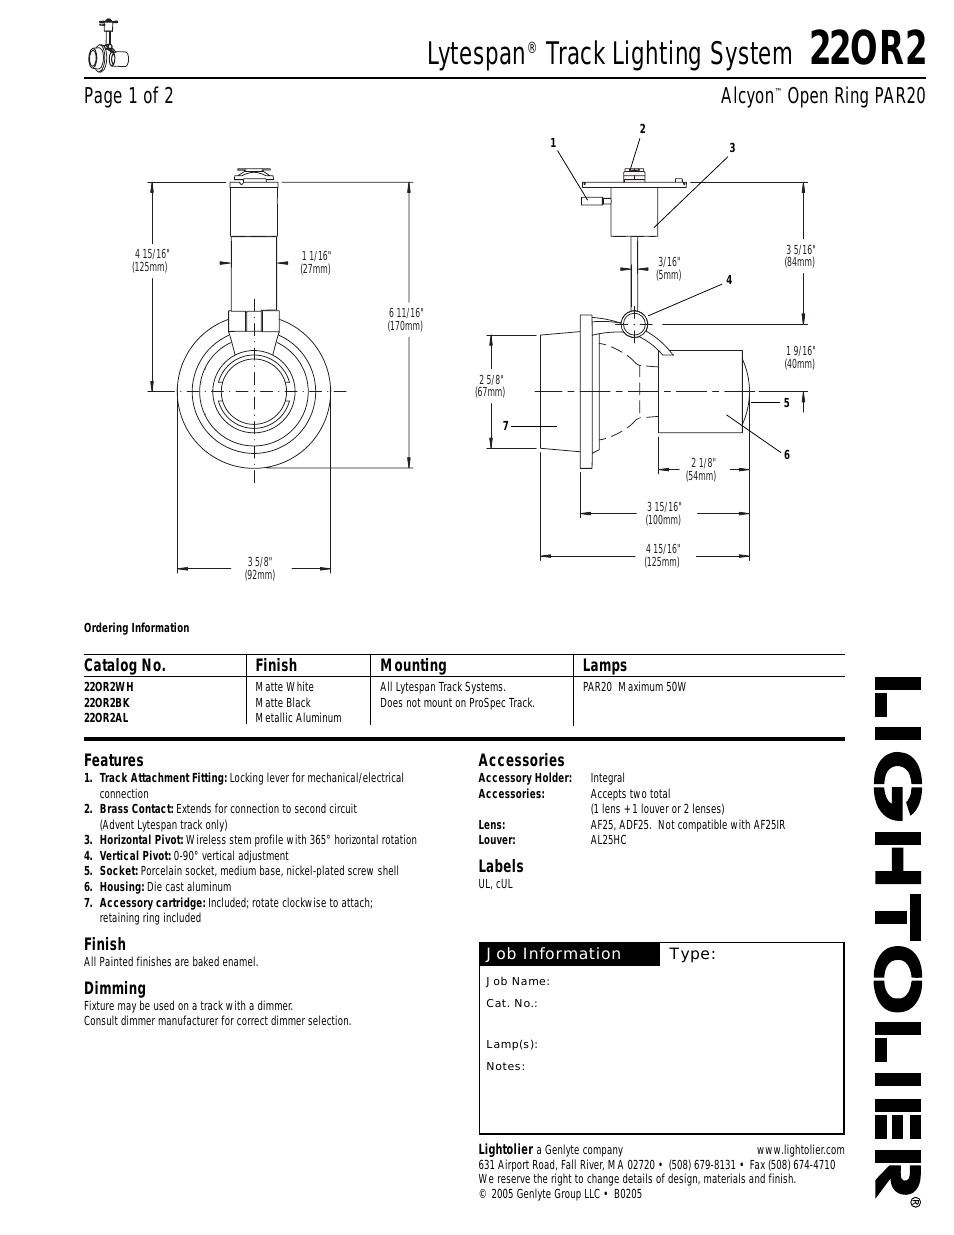 Lytespan Track Lighting System 22OR2